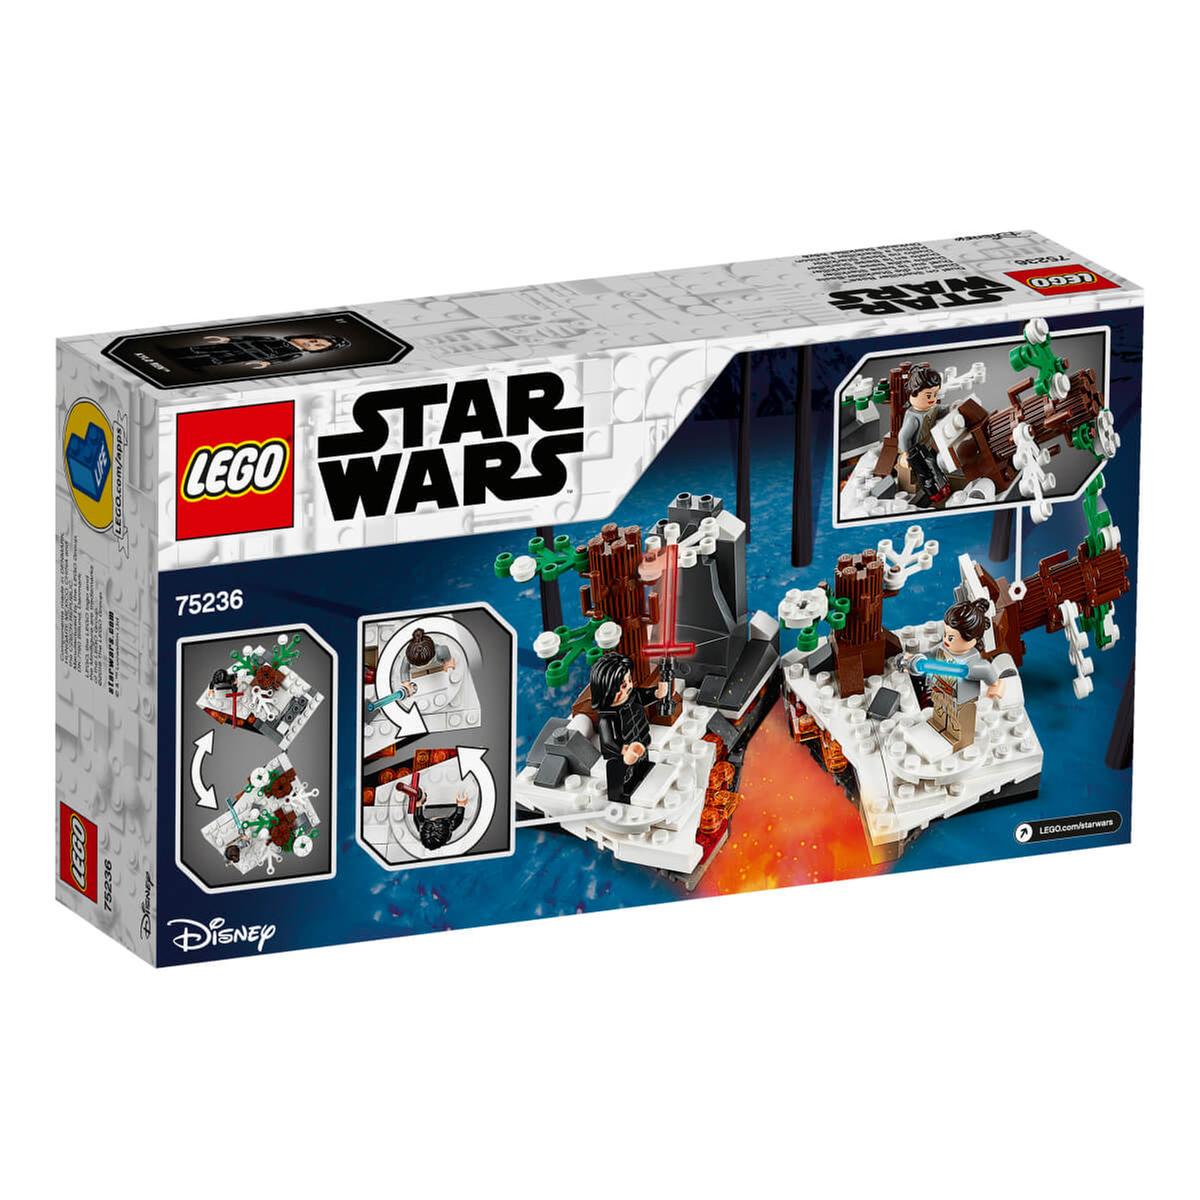 LEGO Star Wars - Duelo en la Base Starkiller - 75236 | Lego Star Wars |  Toys"R"Us España